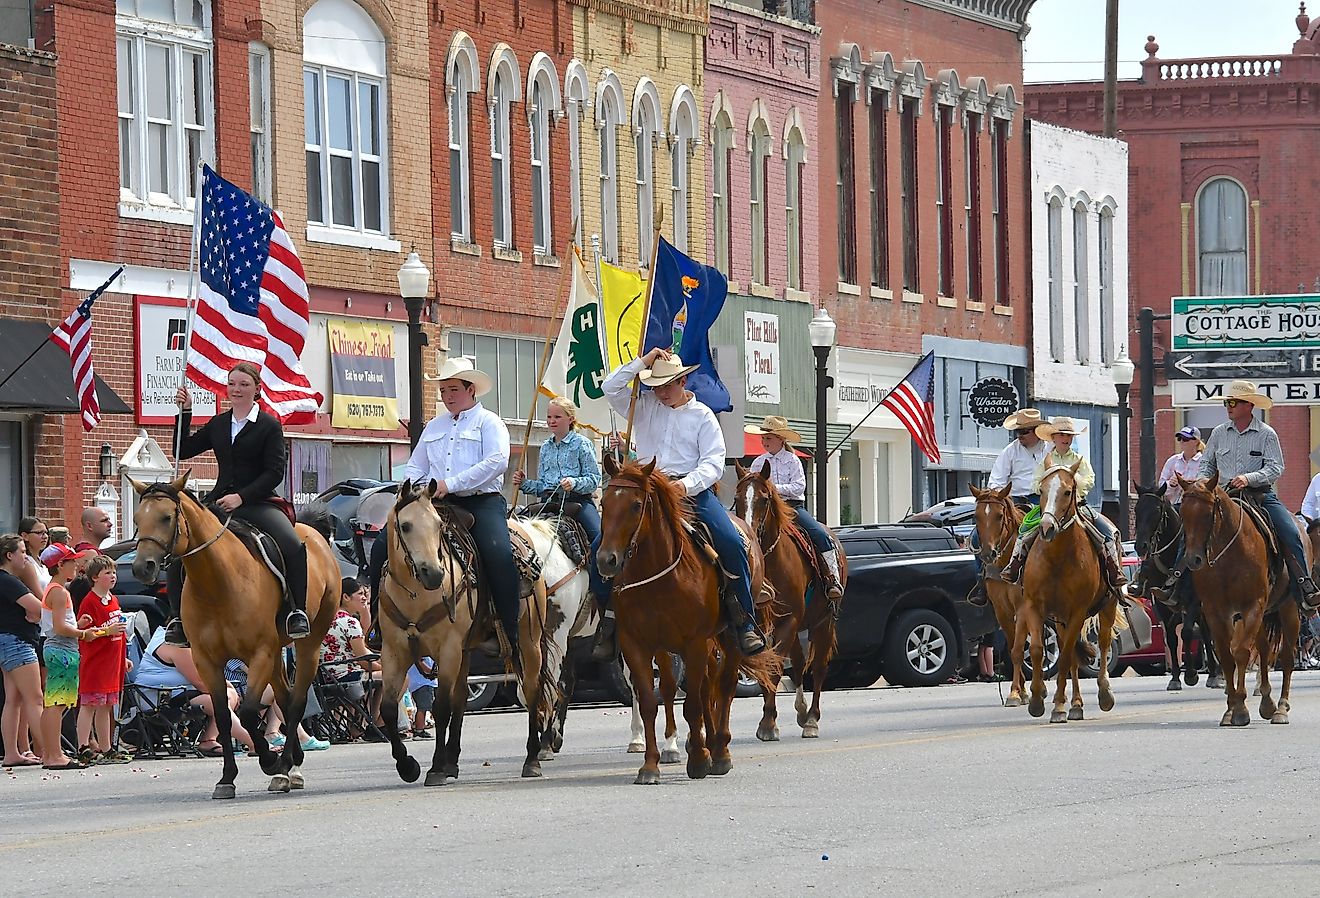 Main Street in the Washunga Days Parade, Council Grove, Kansas. Image credit mark reinstein via Shutterstock